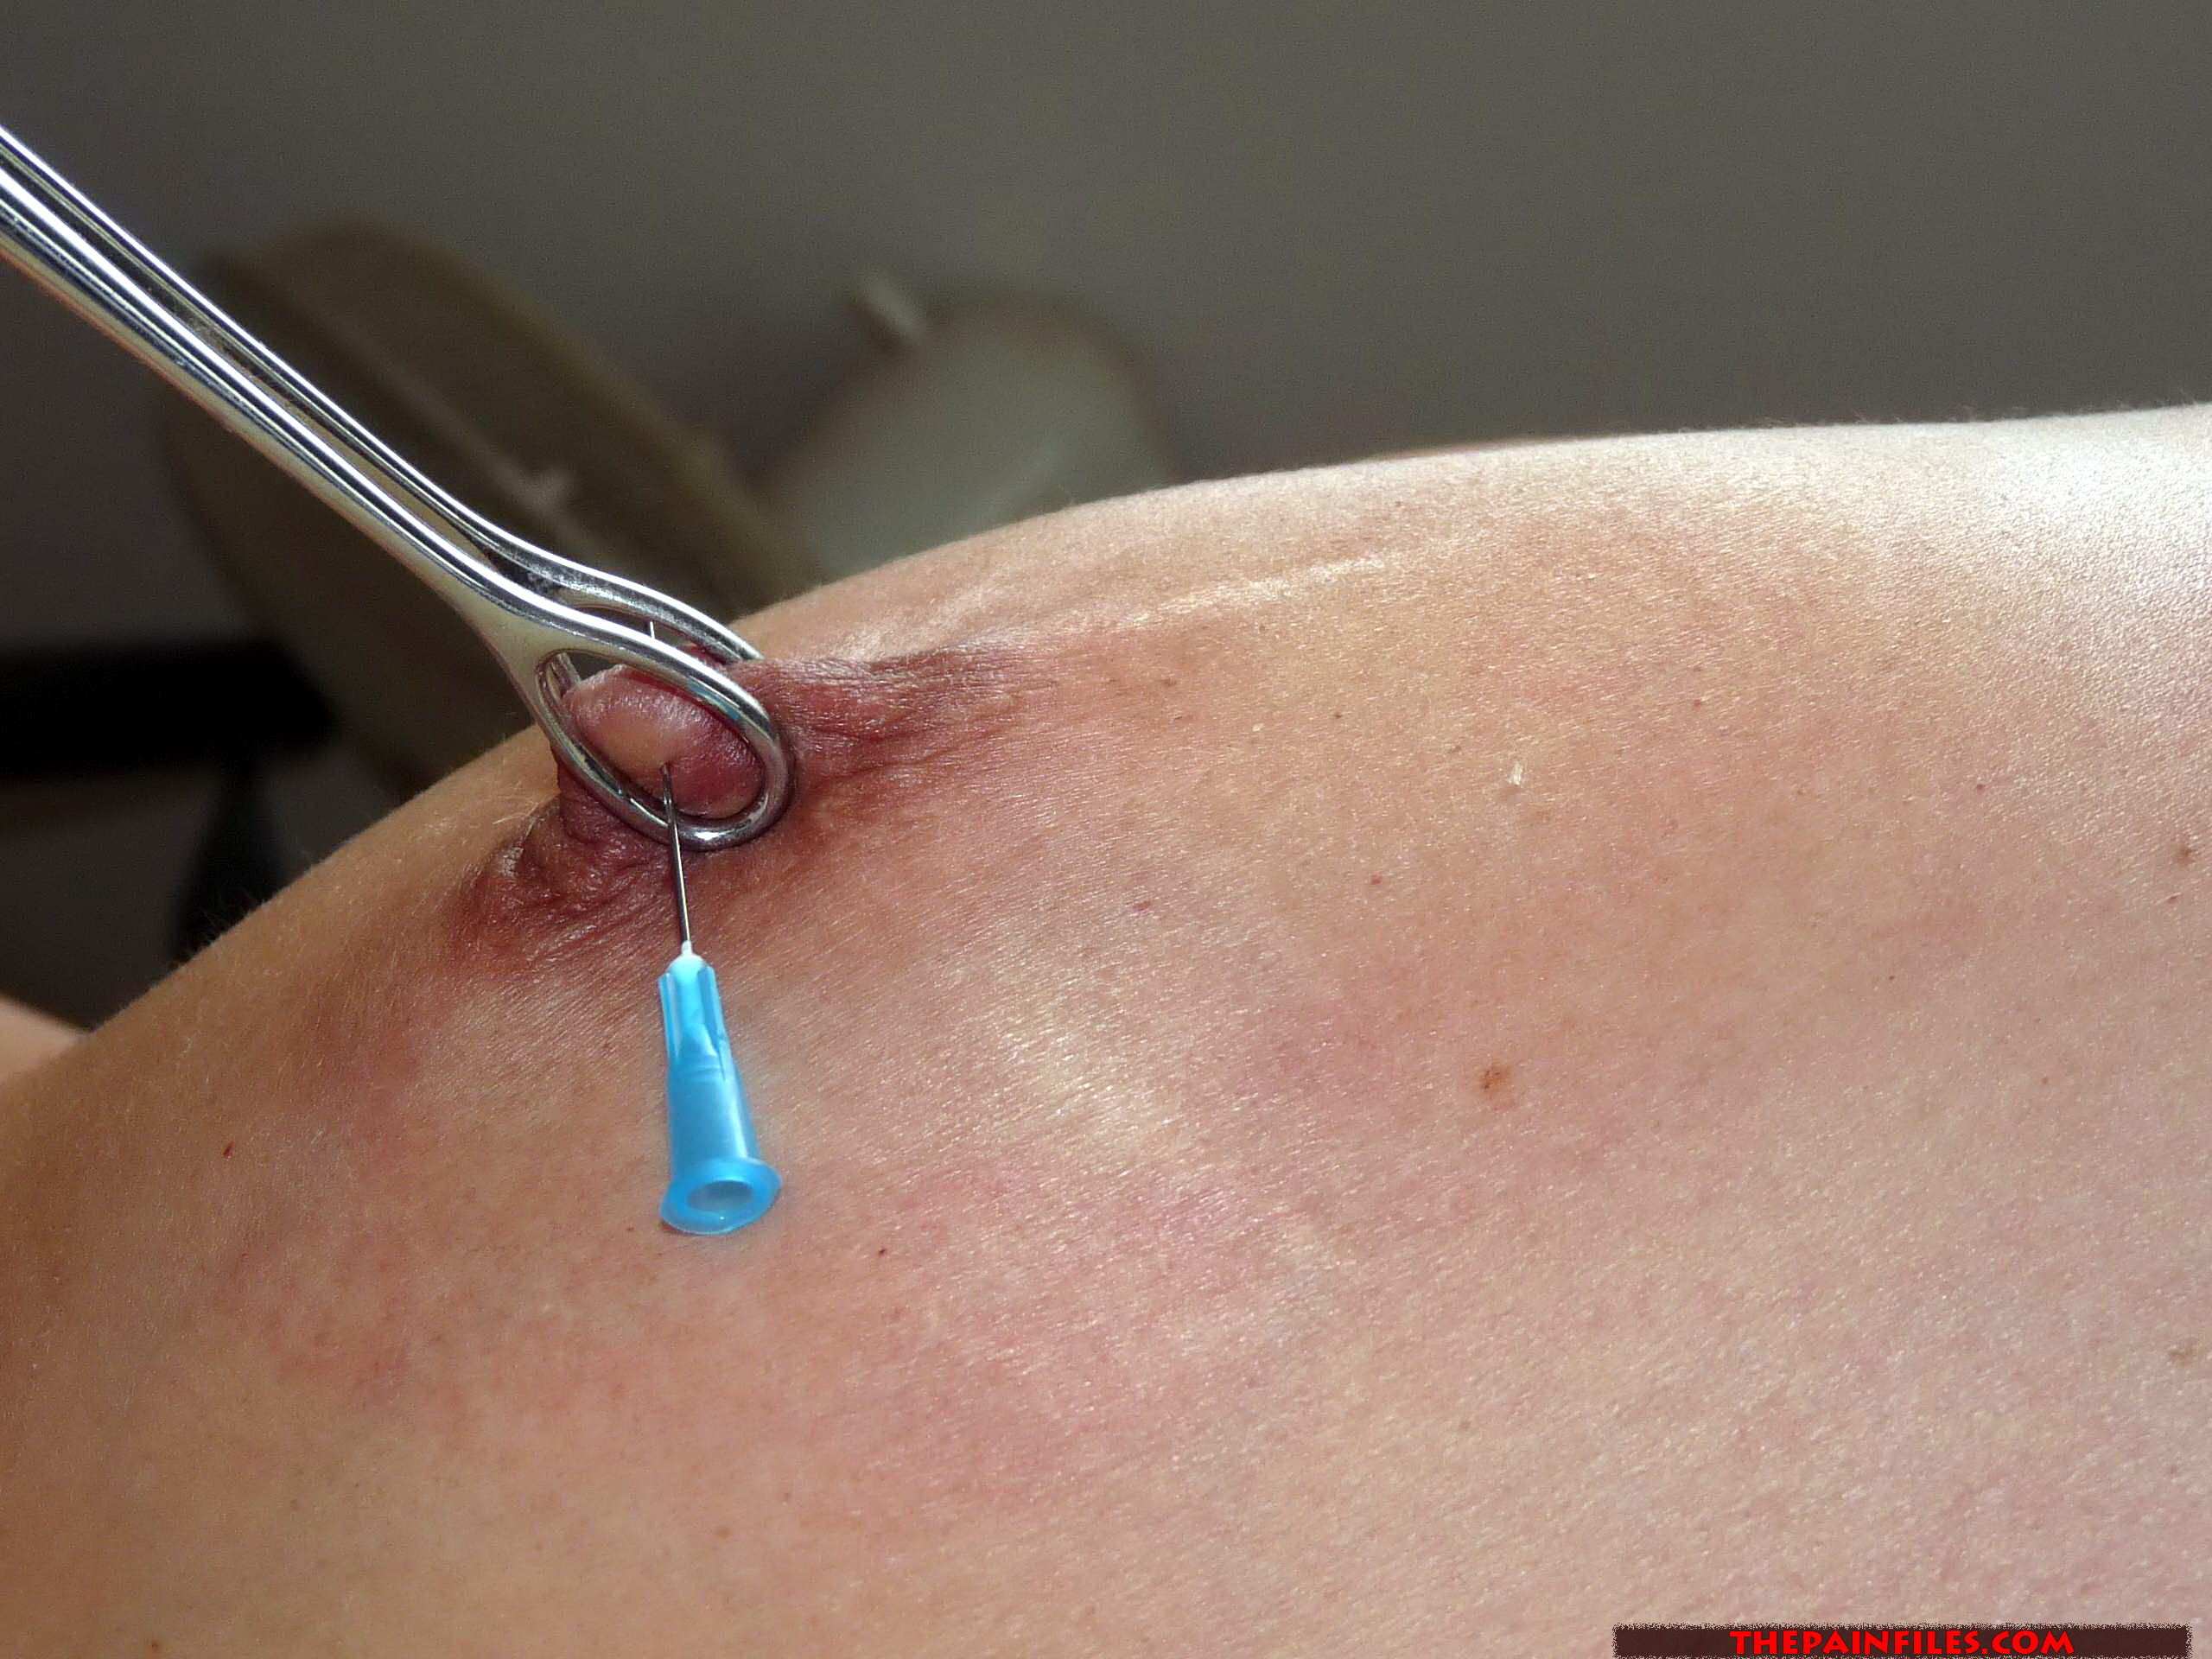 Belgian Needle BDSM pic